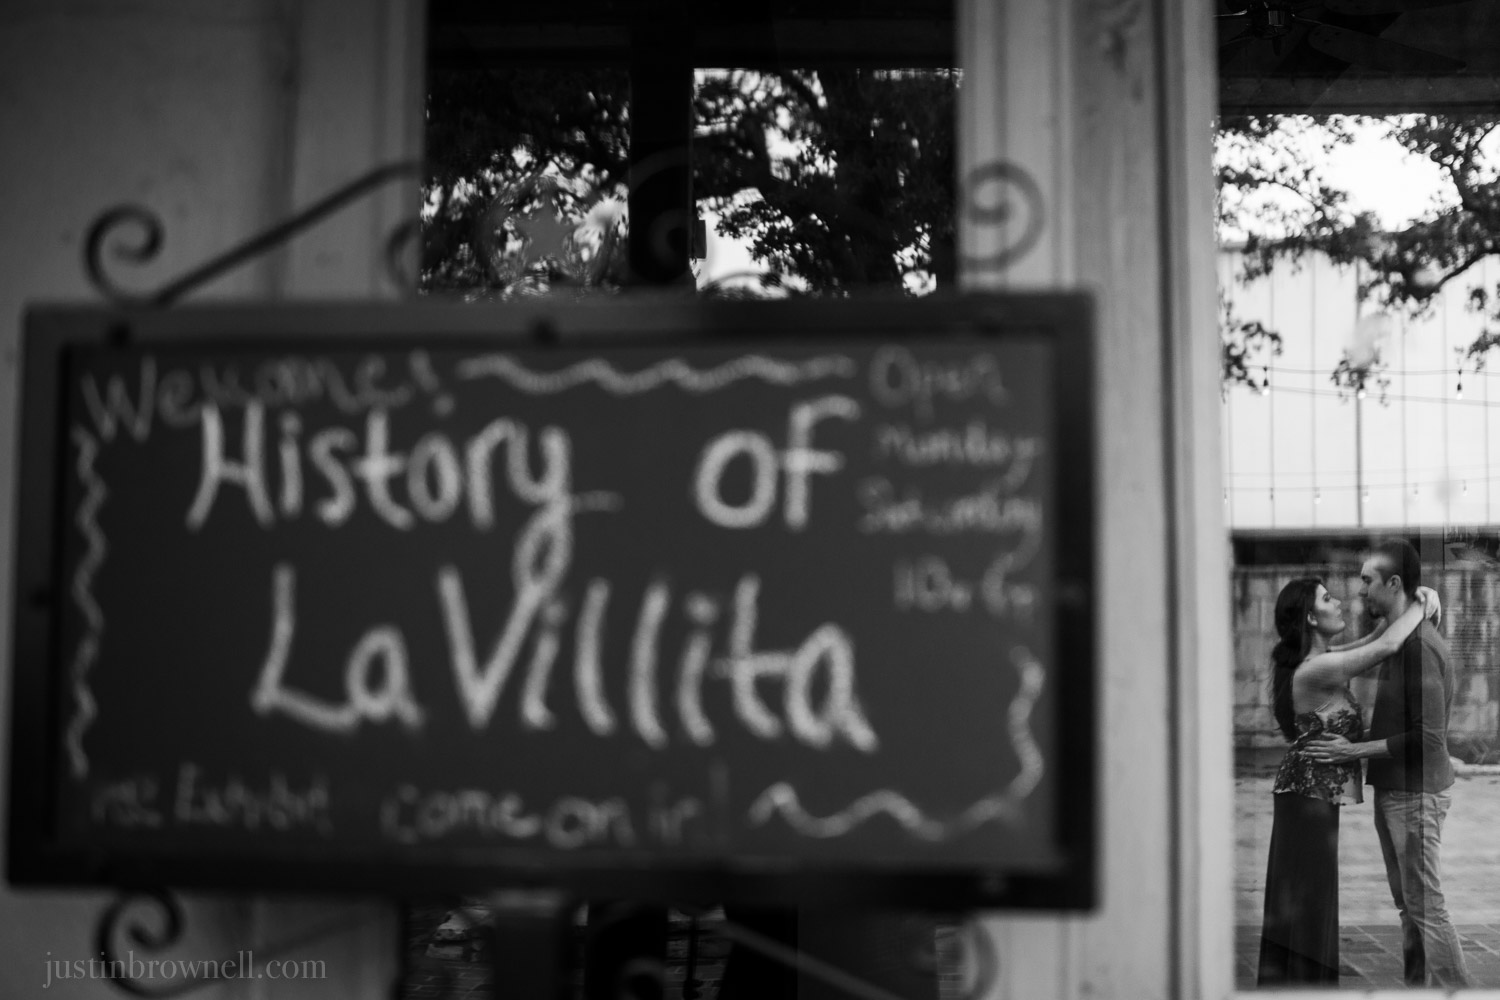 History of La Villita